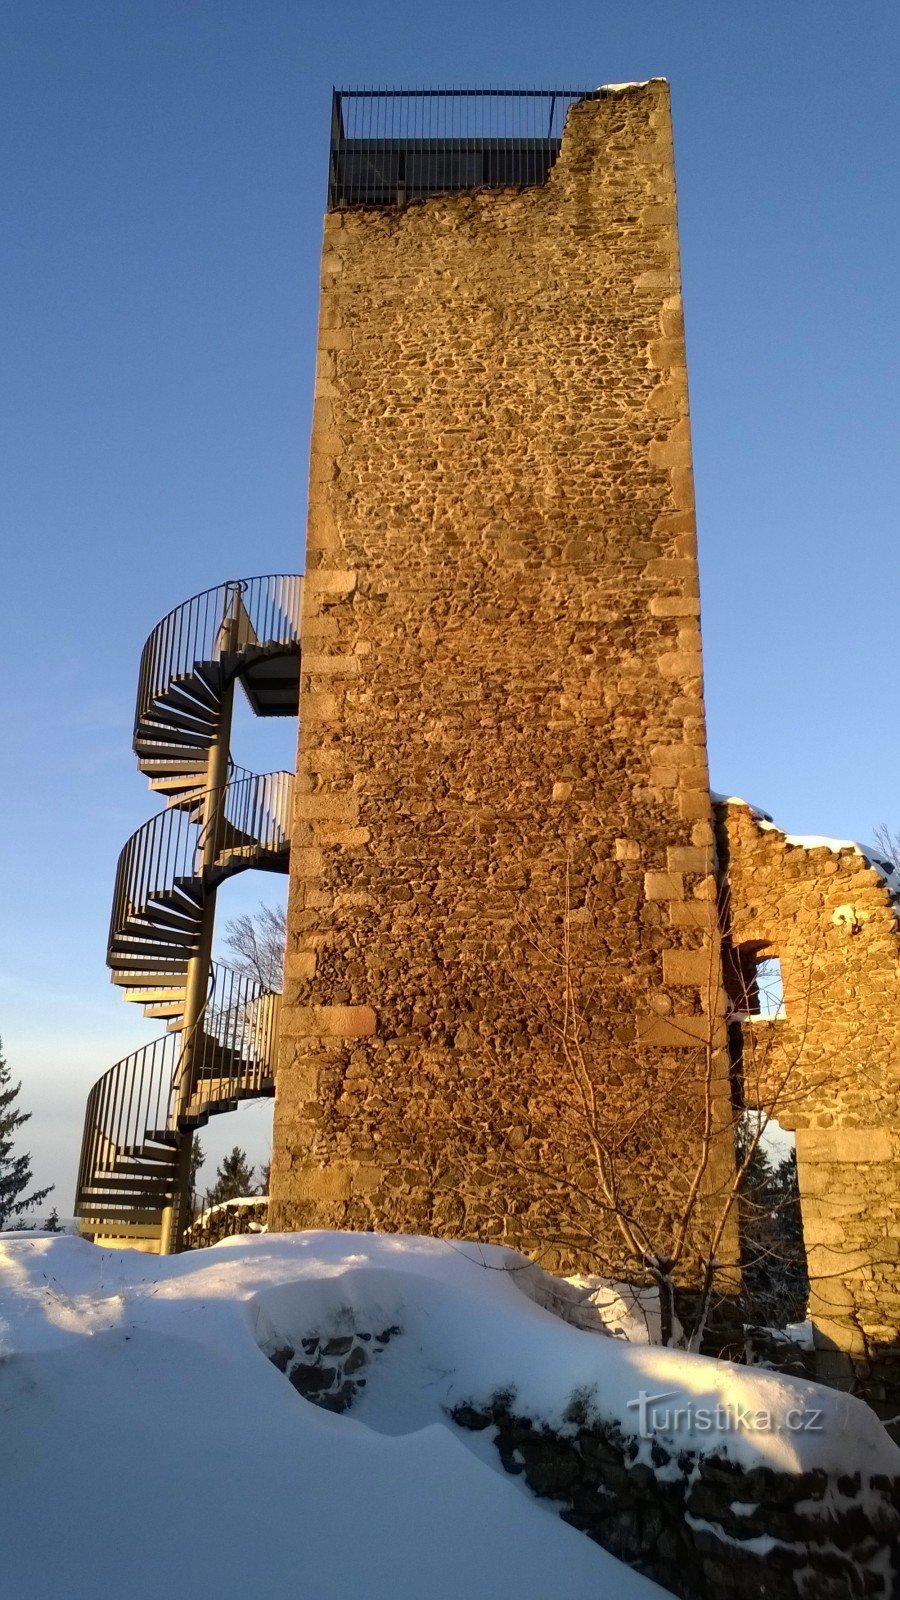 Lookout tower at Orlík nad Humpolcem castle.